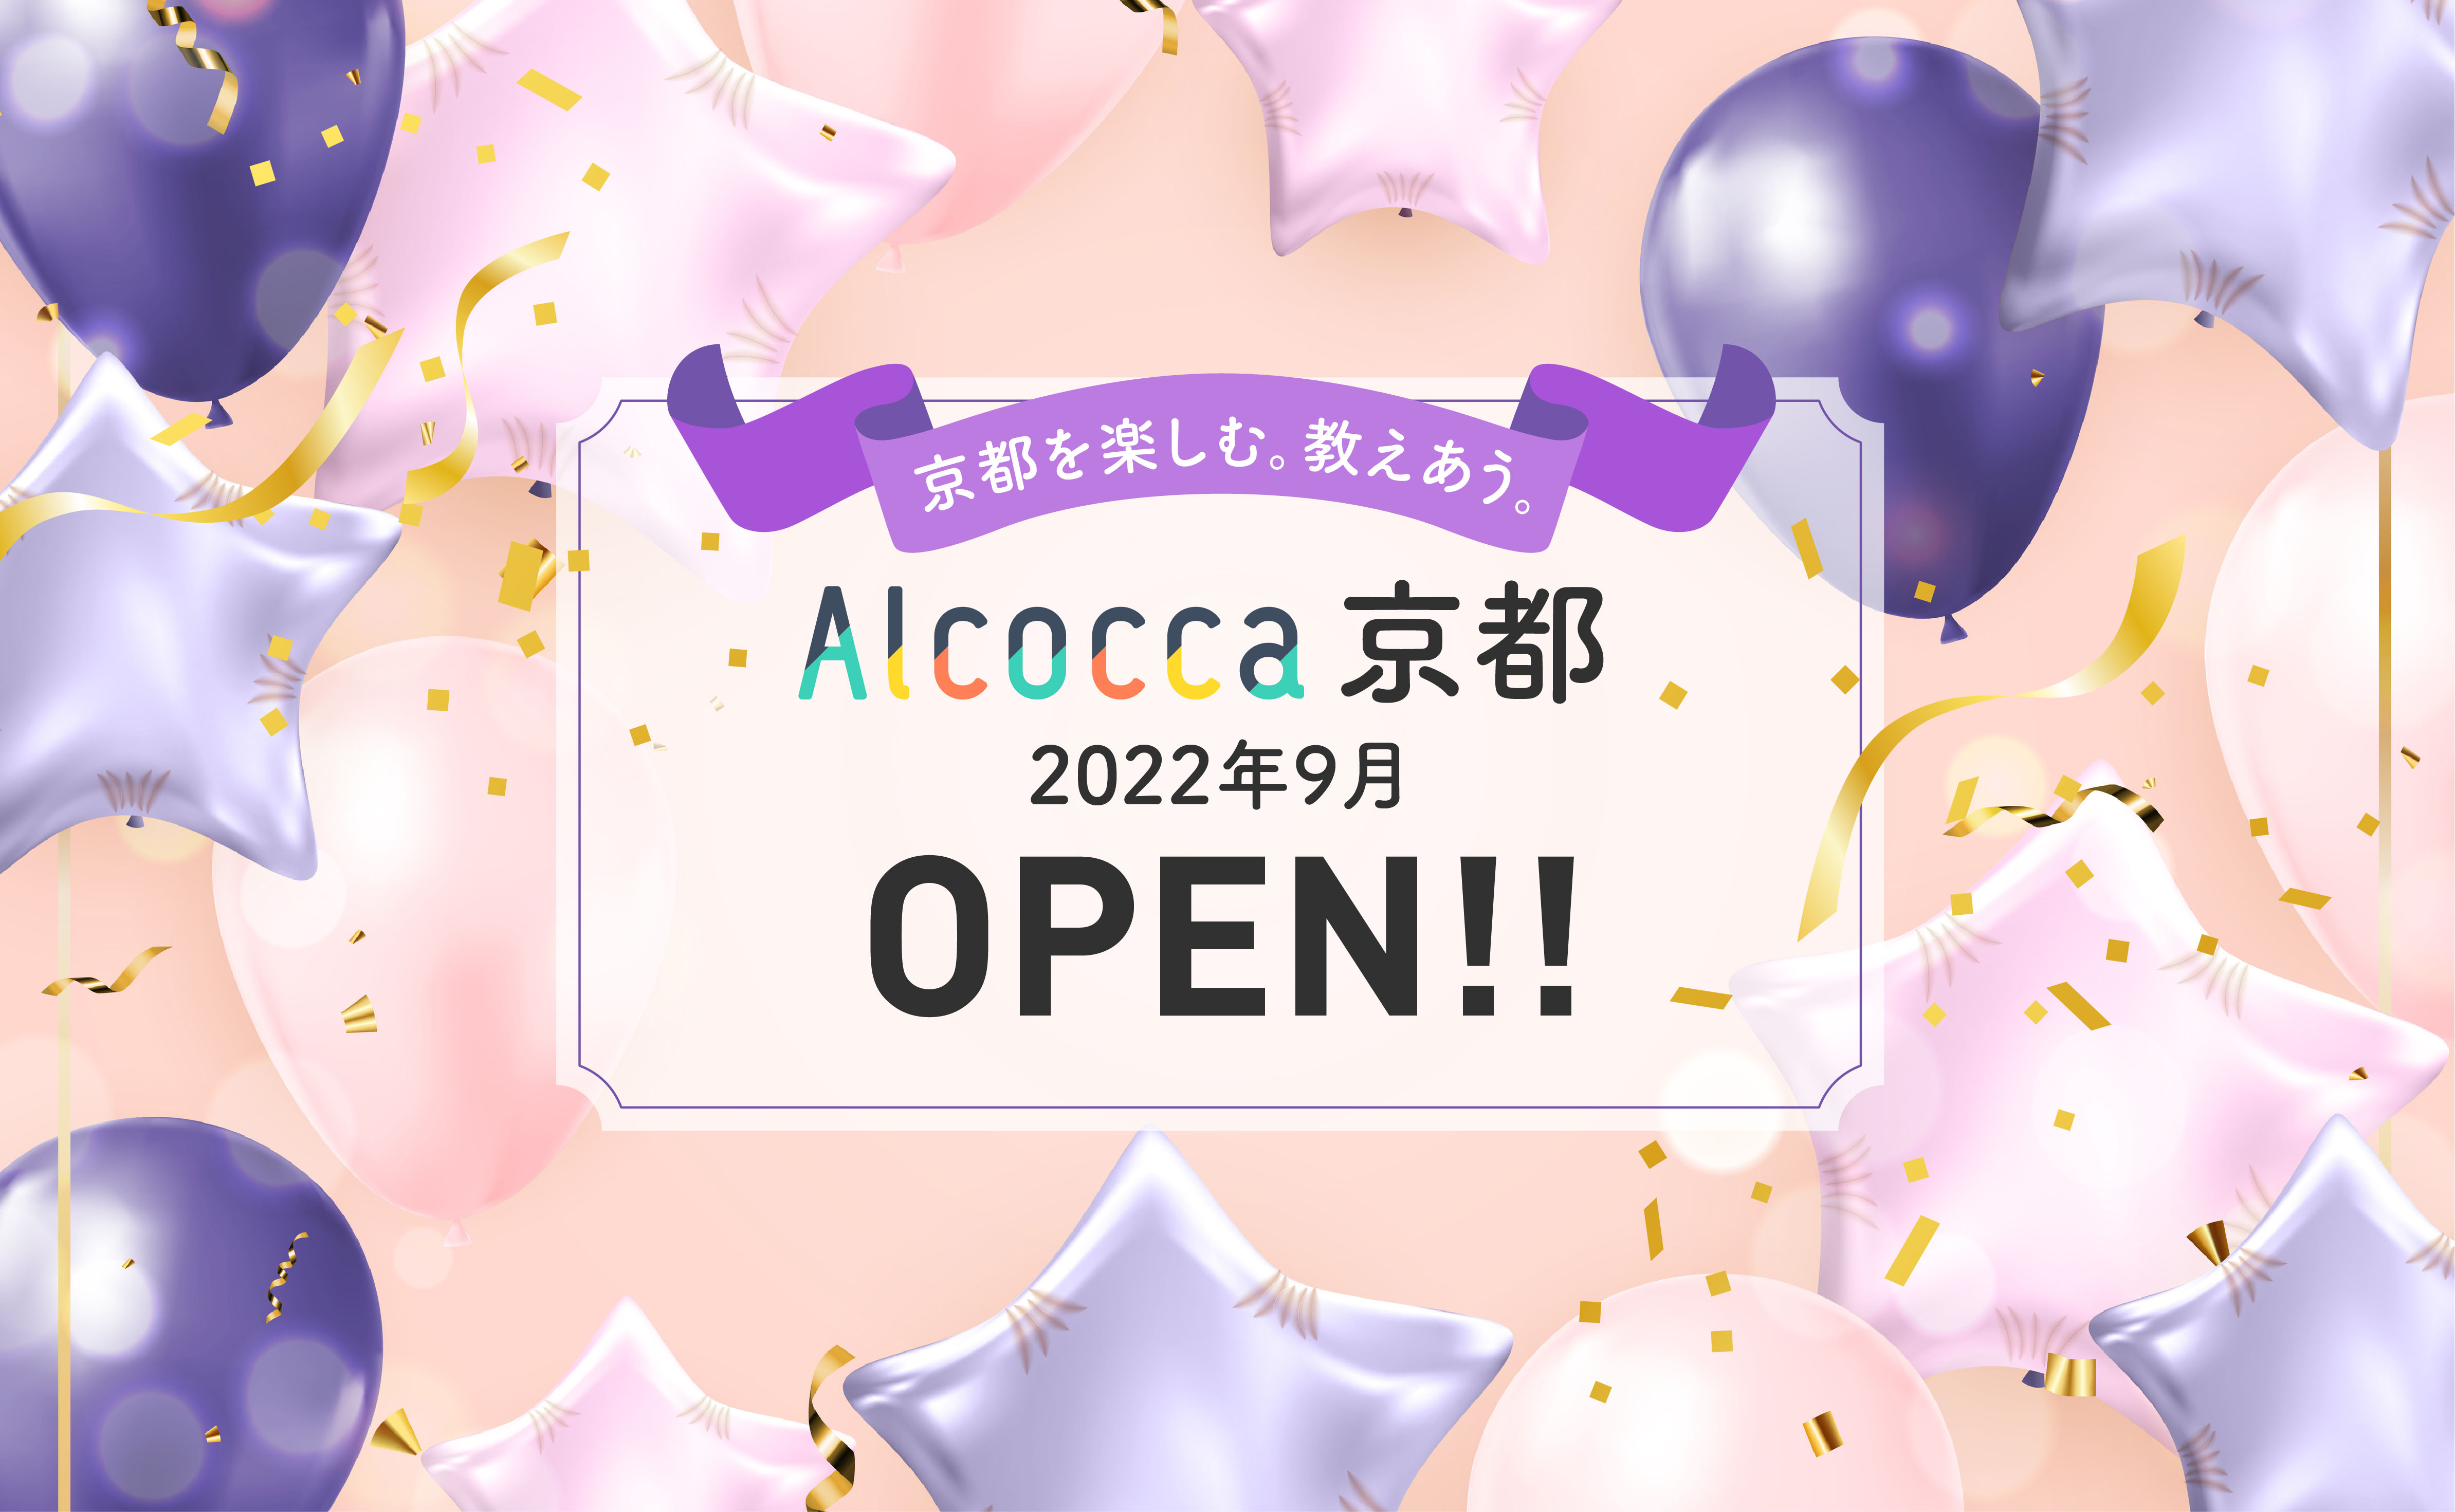 Alcocca京都 OPEN!